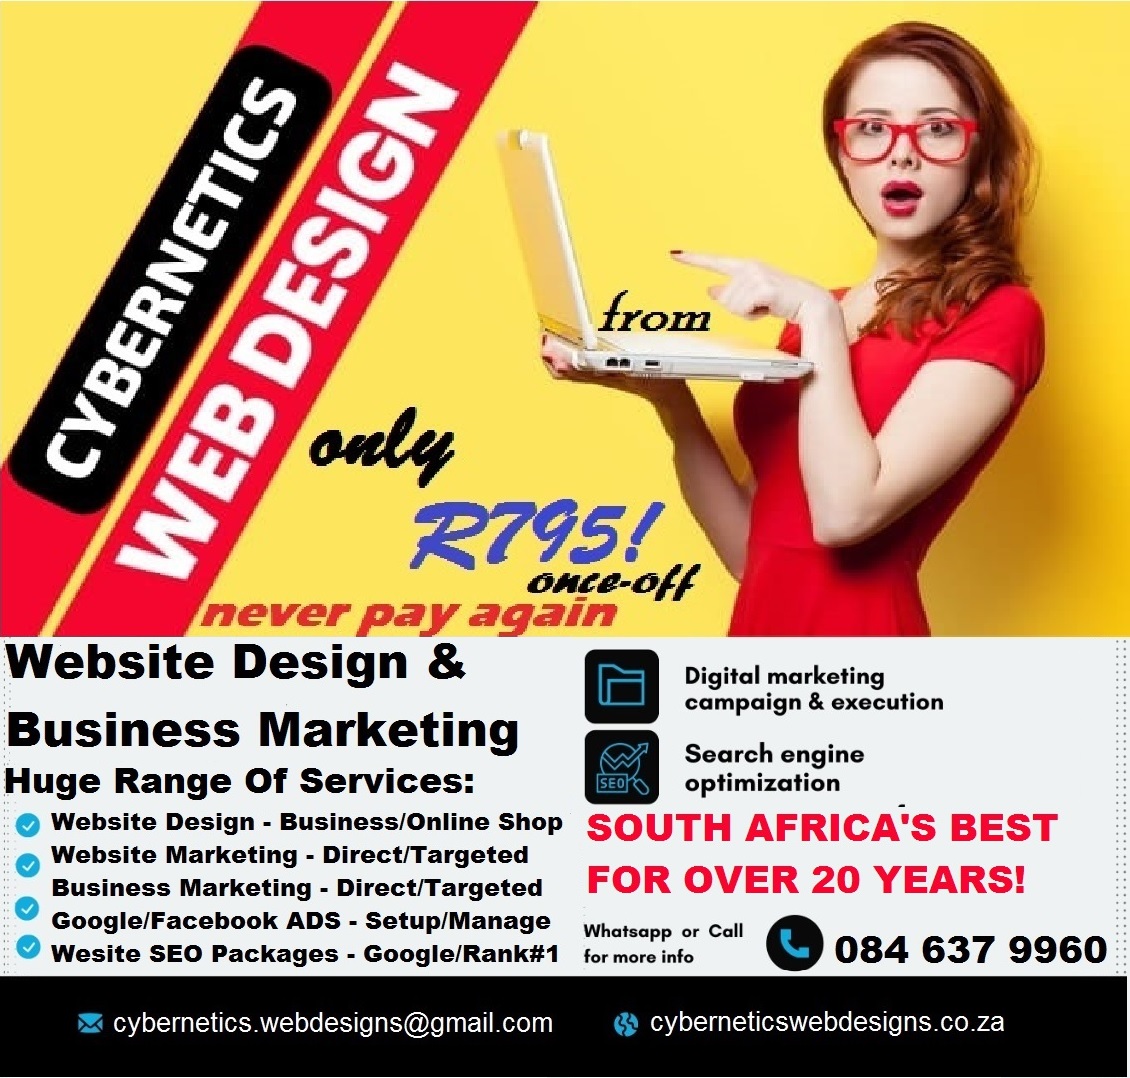 Cybernetics Web Designs ZA - Website Design & Business Marketing Agency South Africa